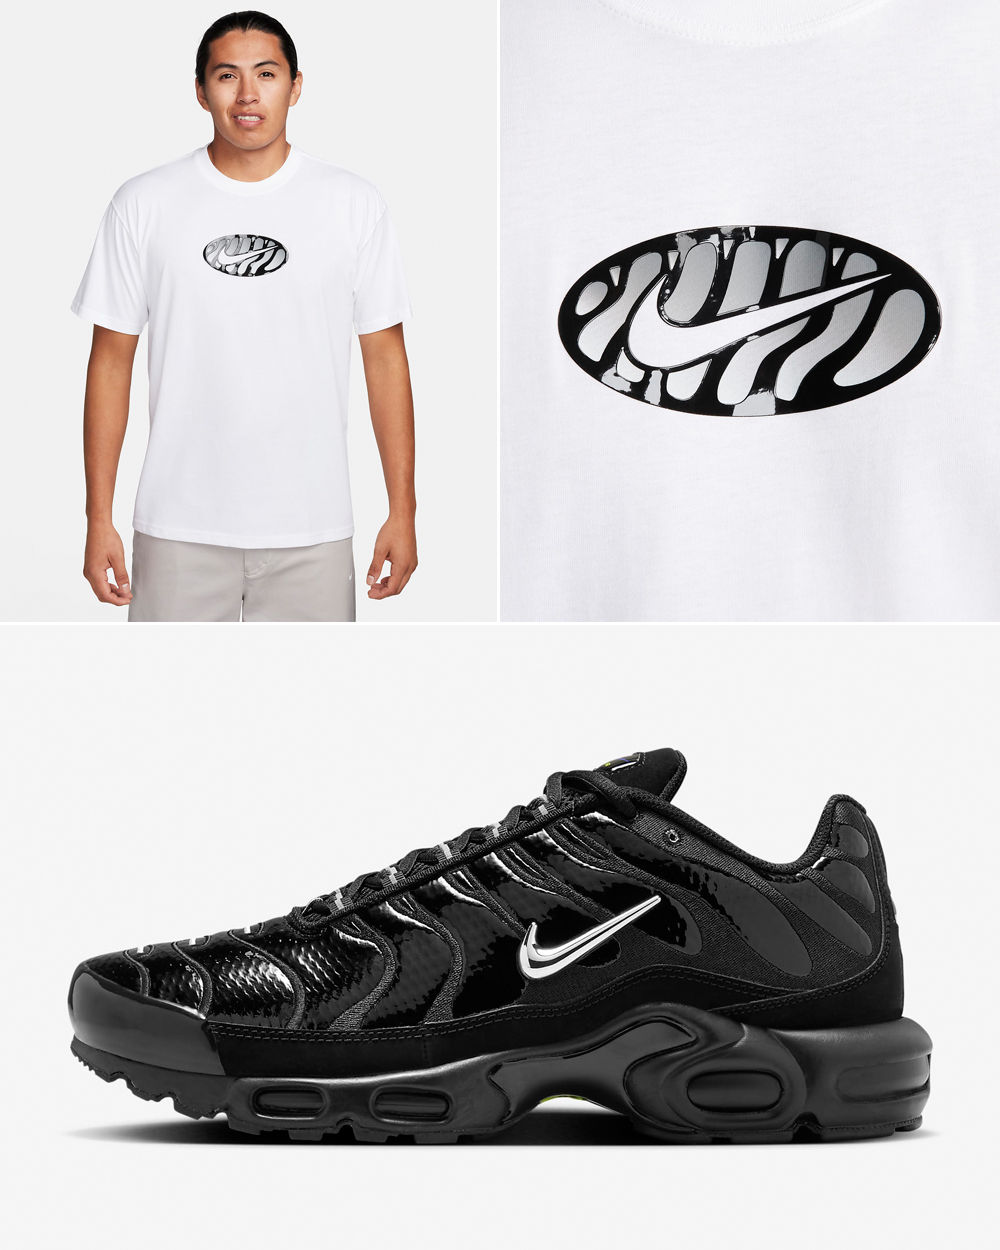 Nike-Air-Max-Plus-Black-Patent-Chrome-Shirt-Matching-Outfit